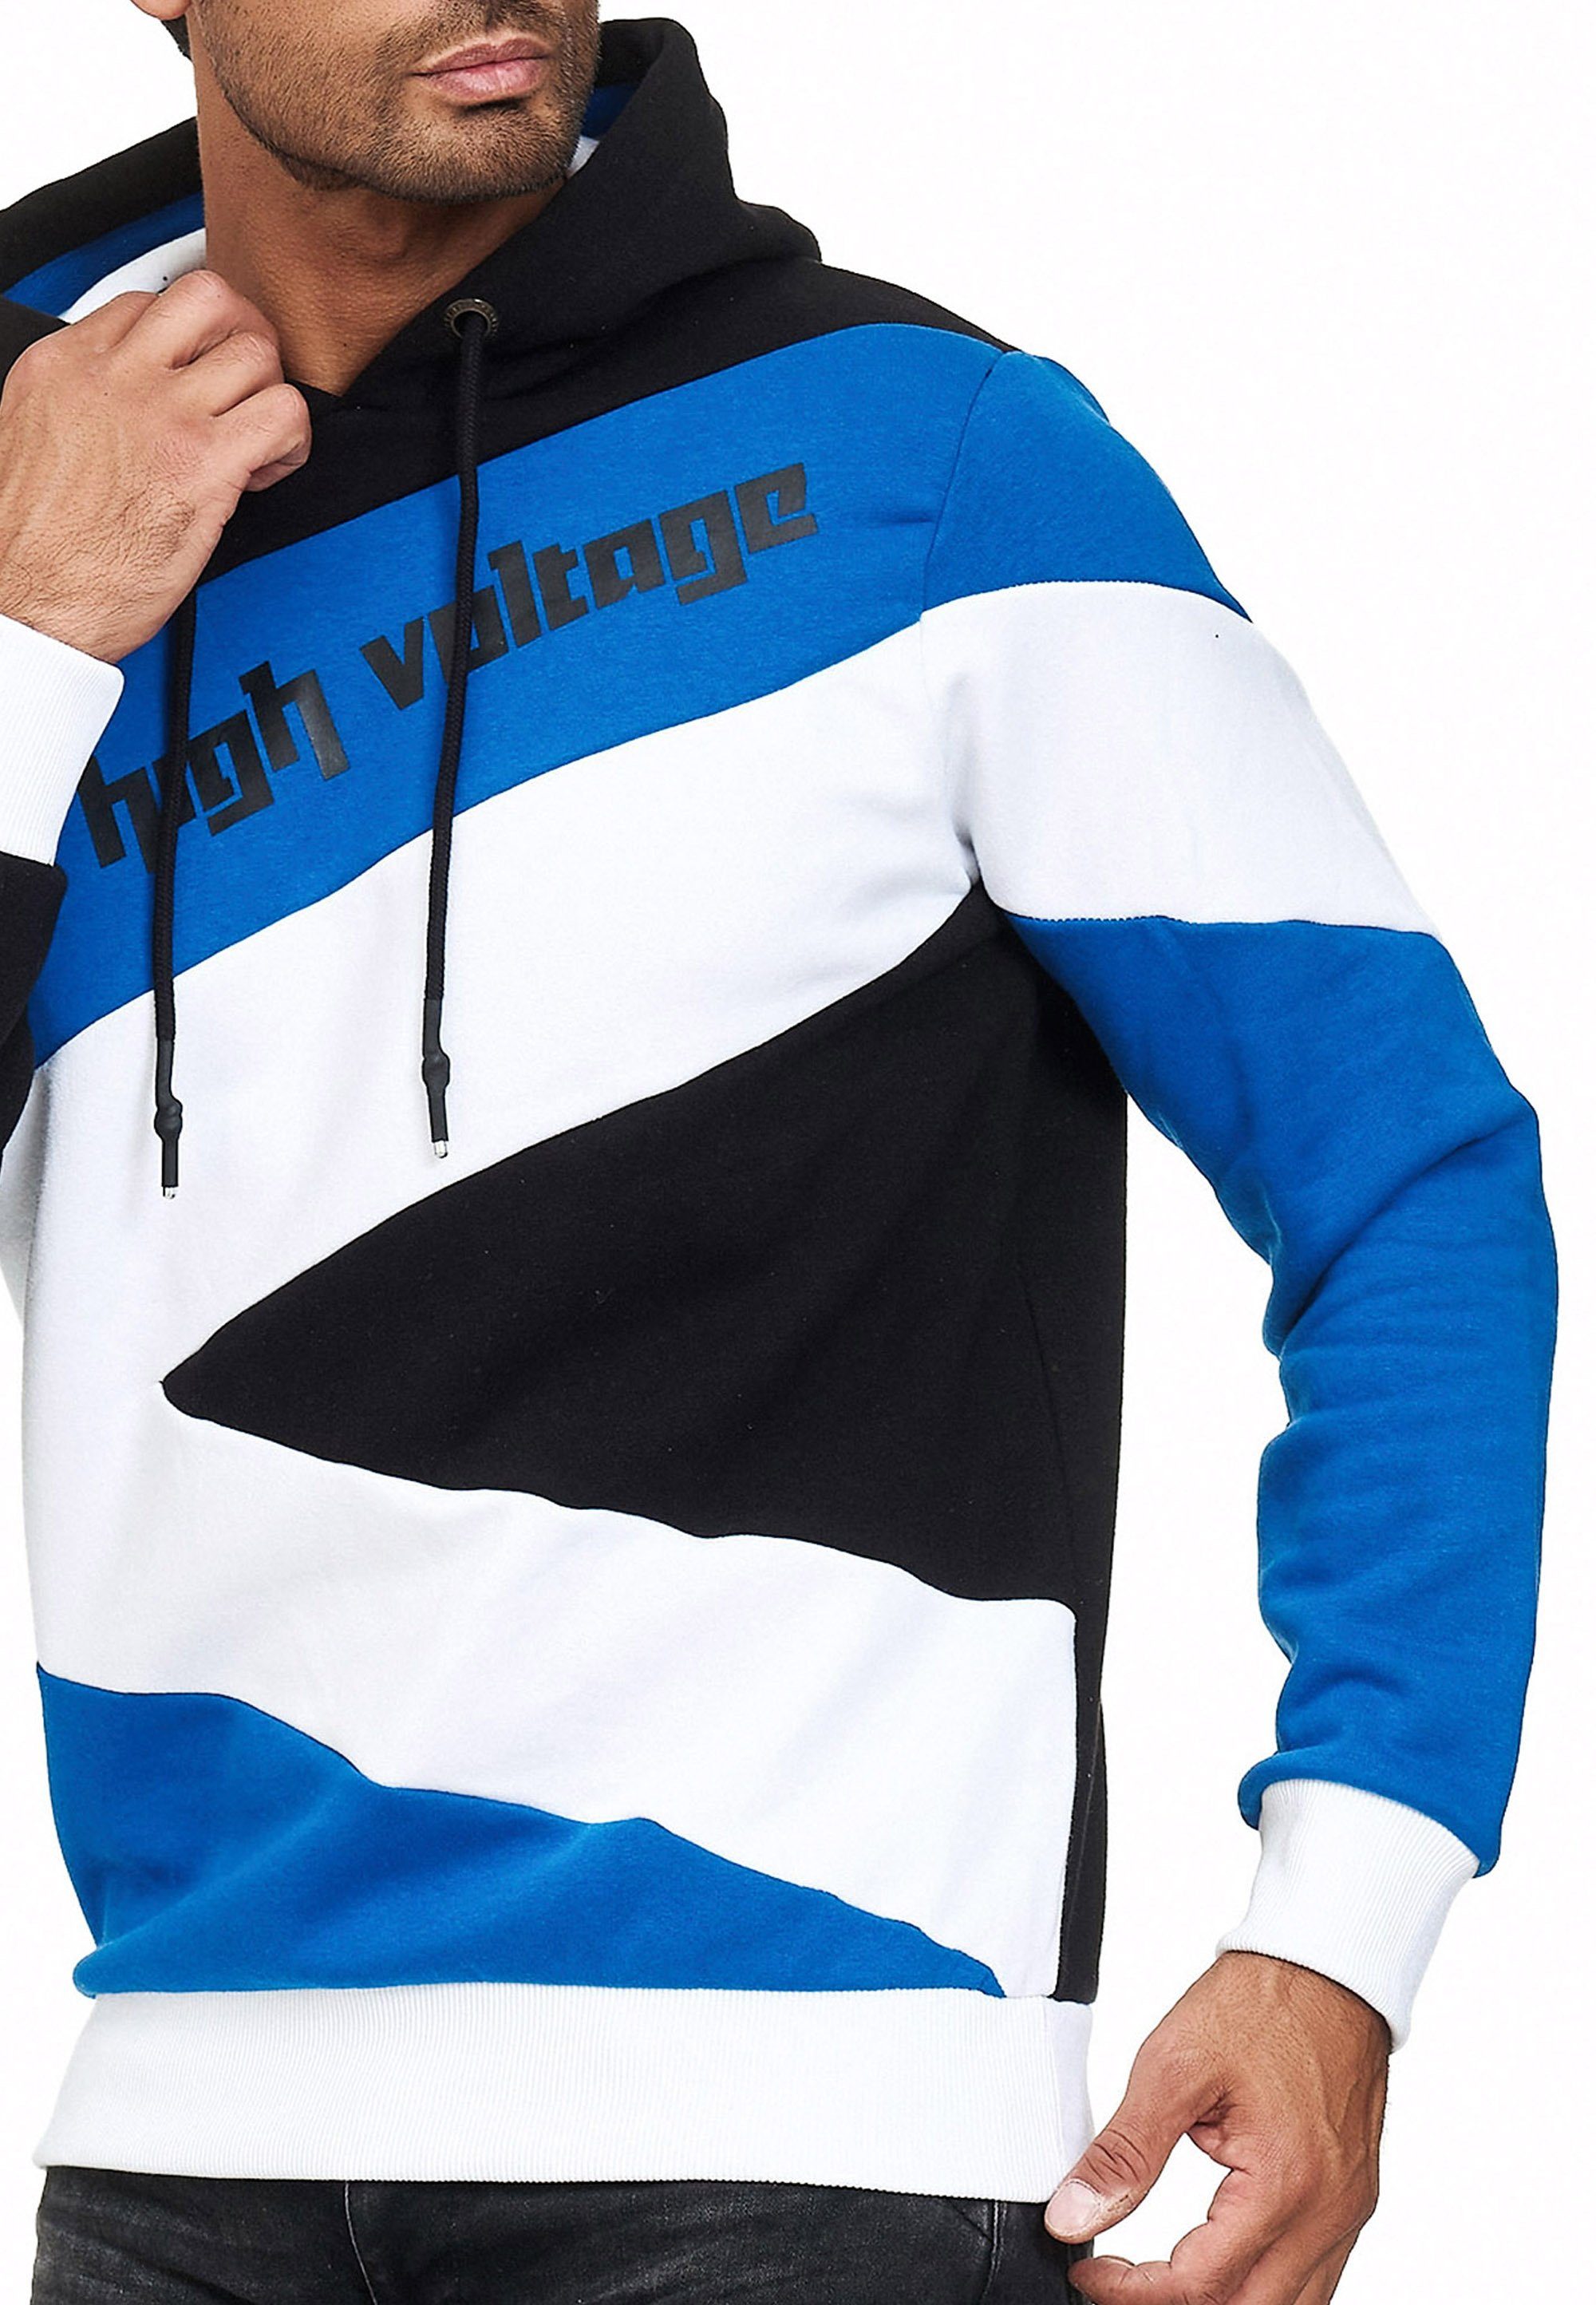 Rusty Neal Kapuzensweatshirt in sportlichem schwarz-blau Design